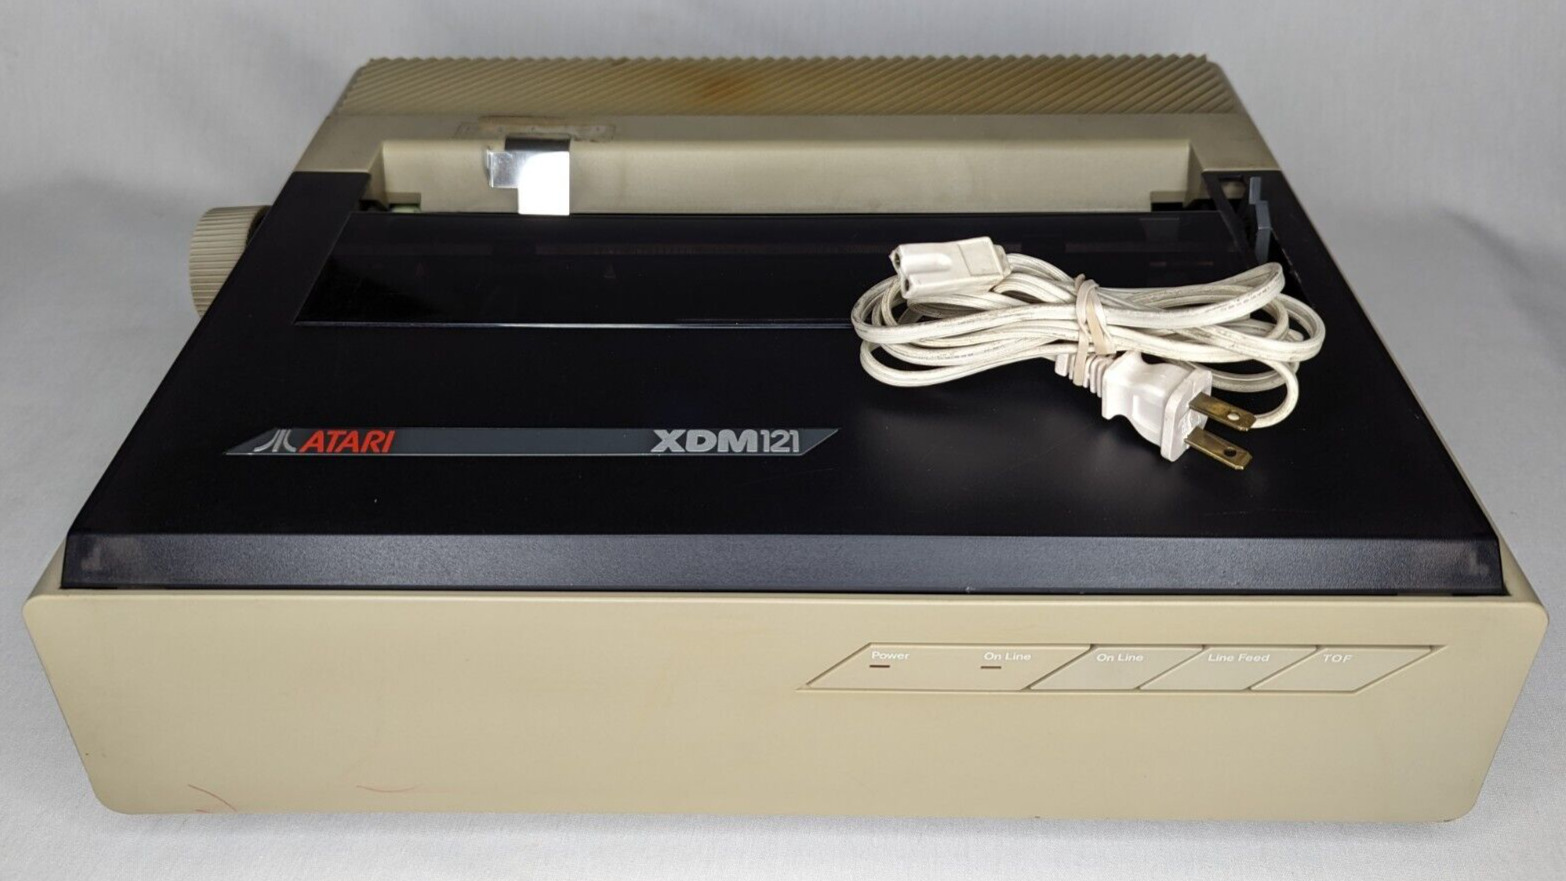 Atari XDM121 Daisy Wheel Printer - Untested fully, sold as is